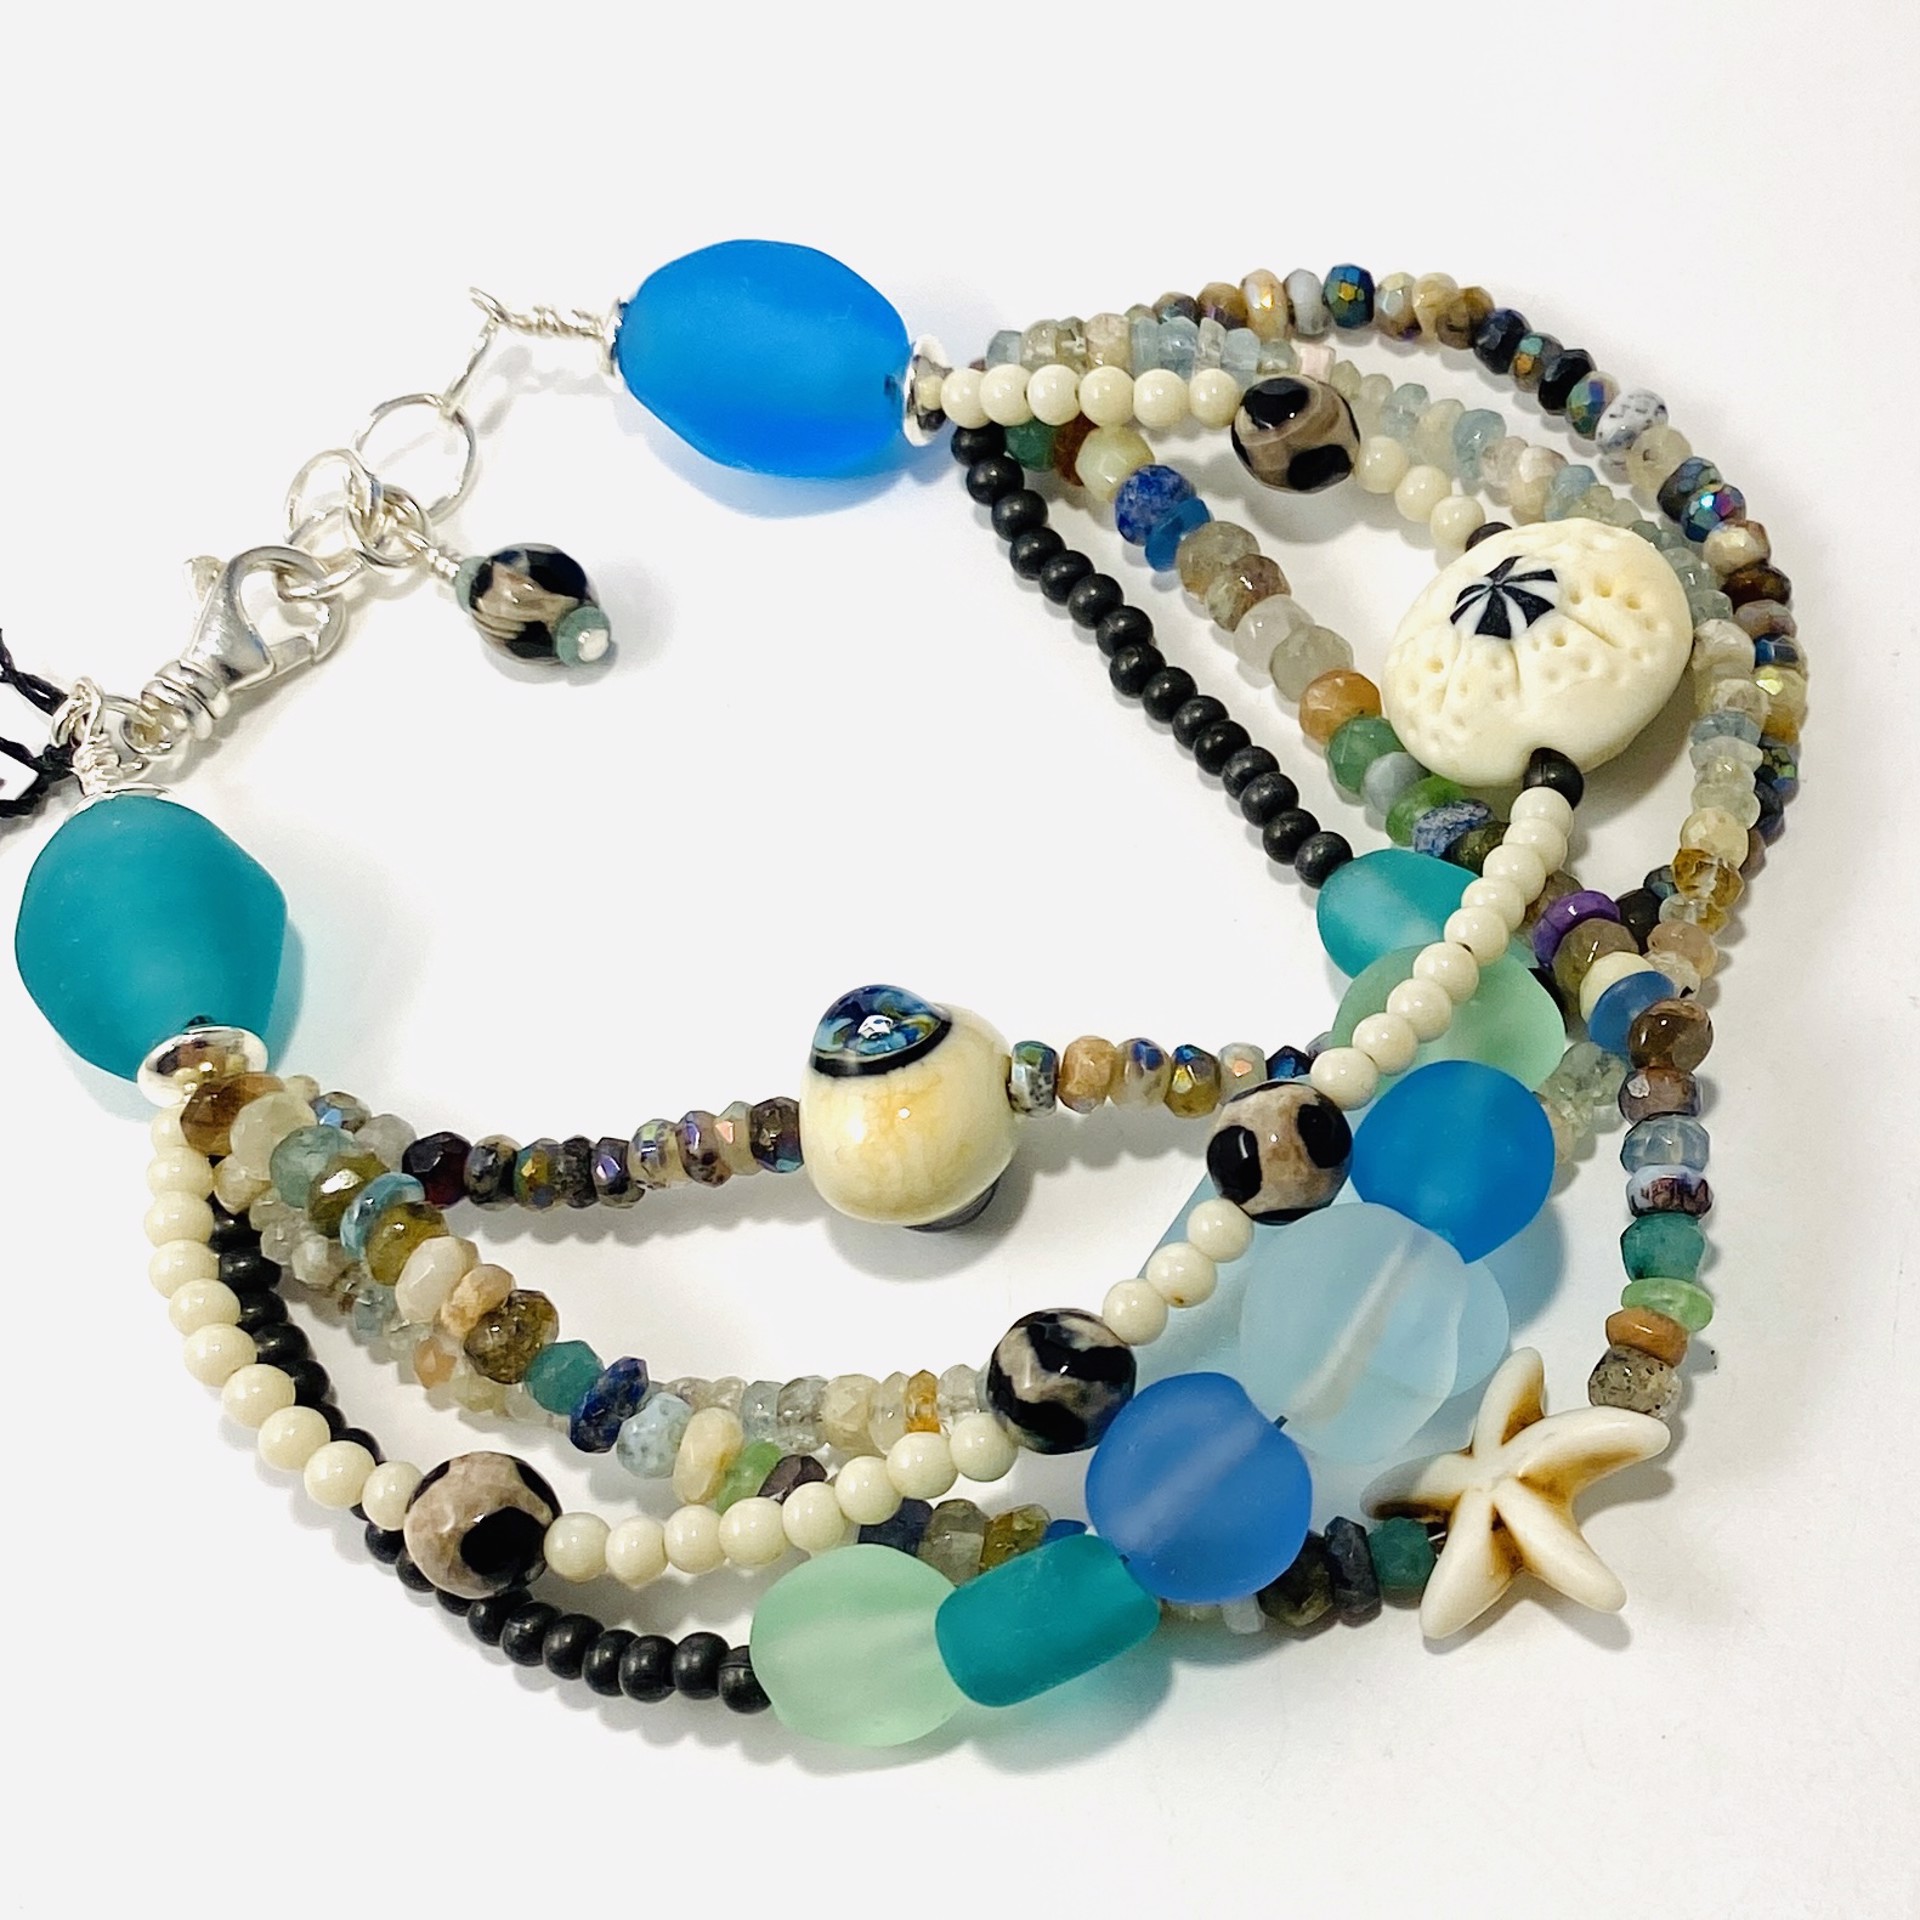 Five Strand Mix “Sea-glass” Glass Beads Gemstone Beads Bracelet LS23-19 by Linda Sacra